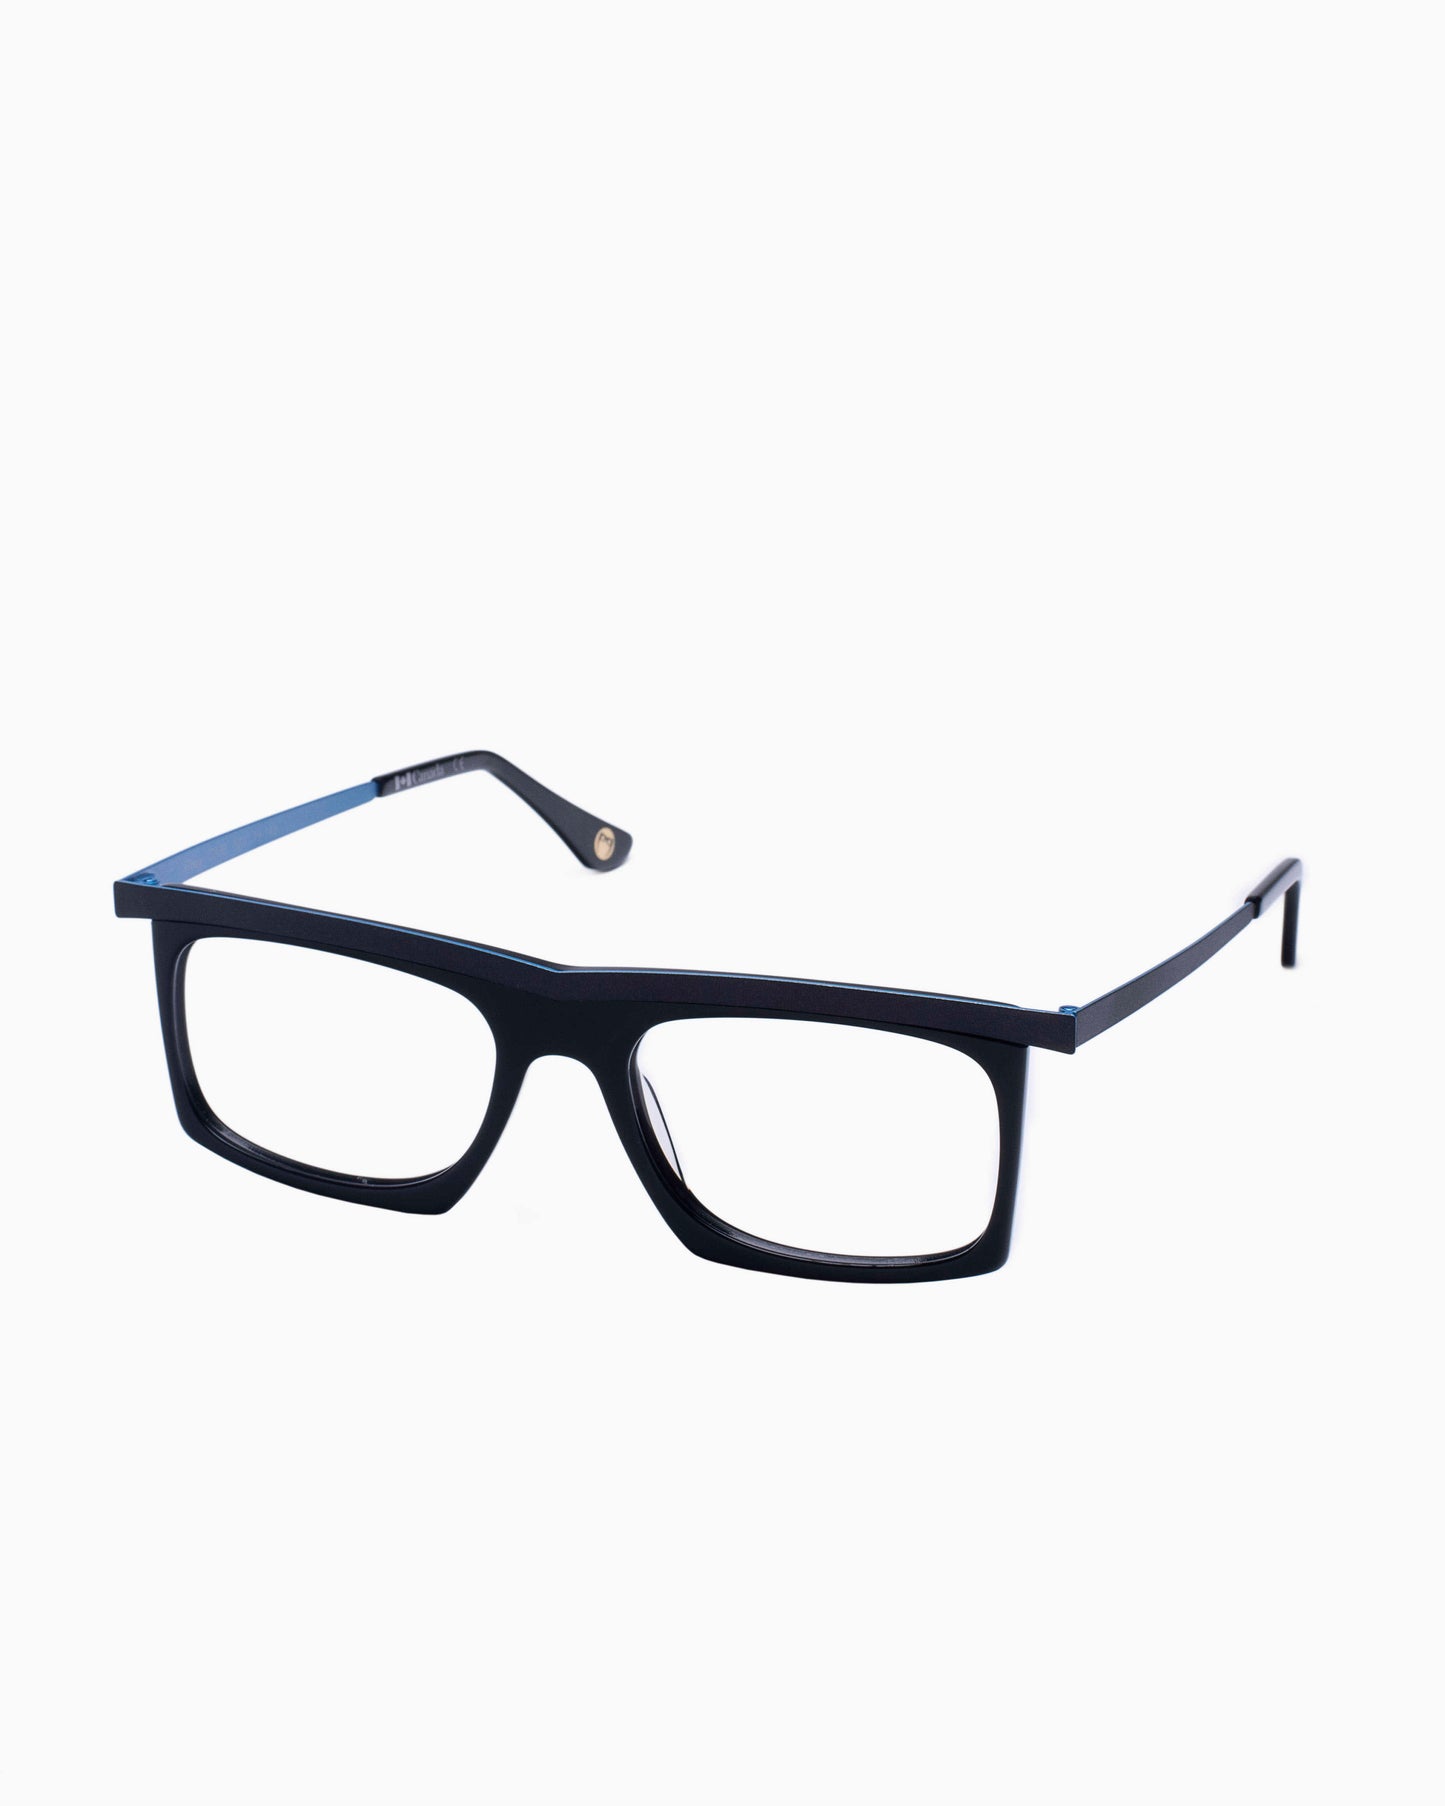 Spectacleeyeworks - Doug - C870 | Bar à lunettes